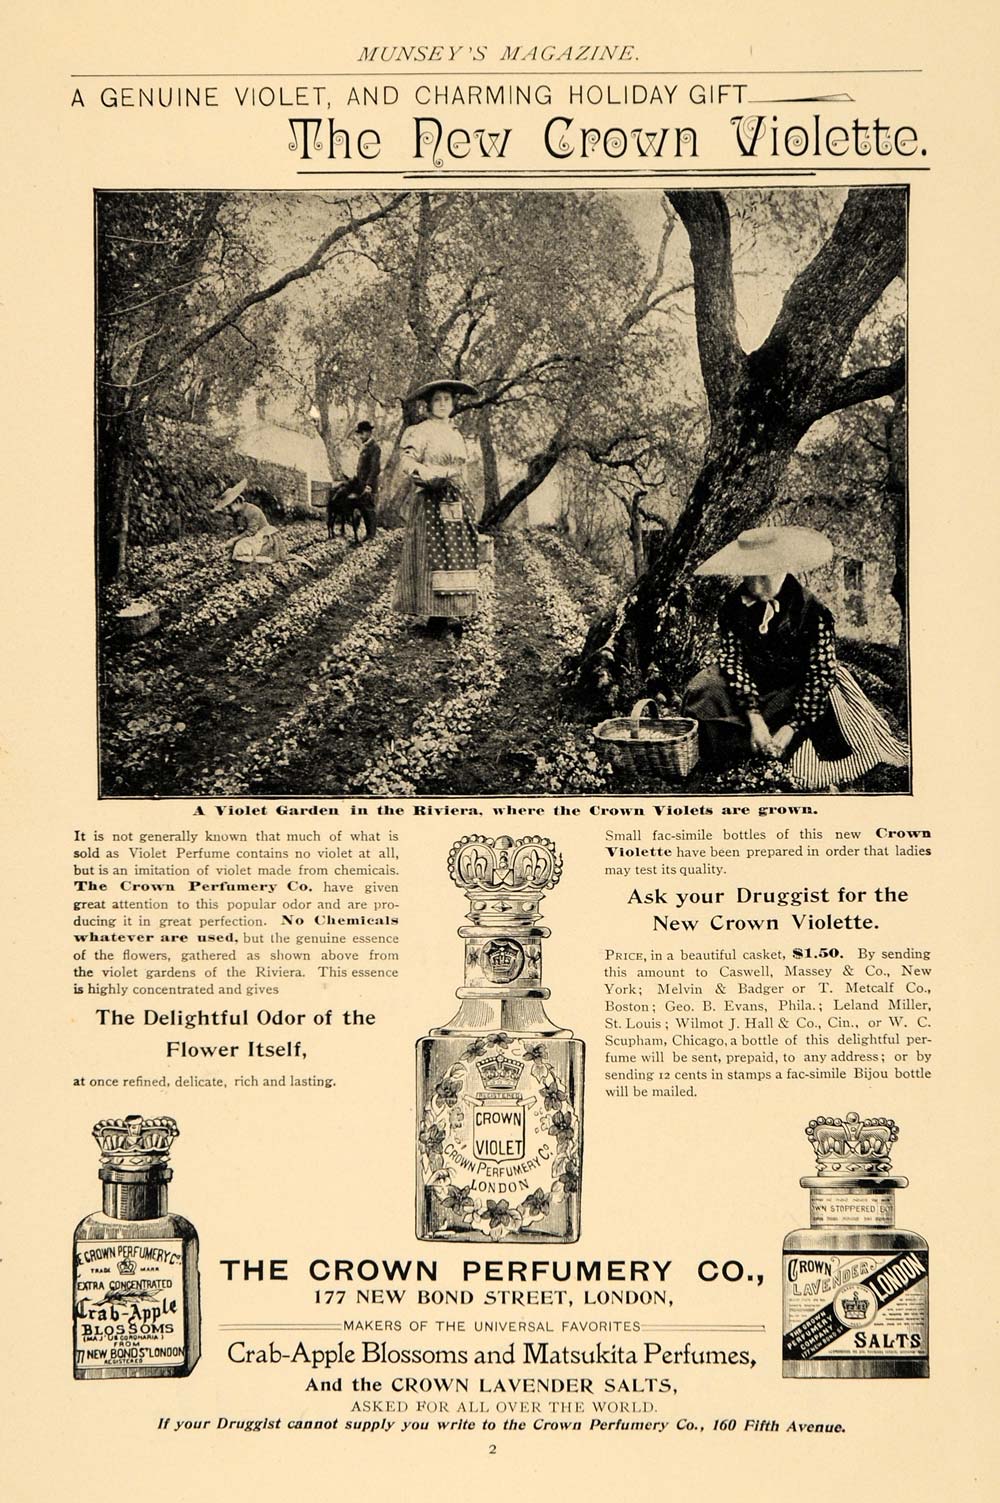 1895 Ad Violette Crown Perfumery Company Violet Garden - ORIGINAL MUN1